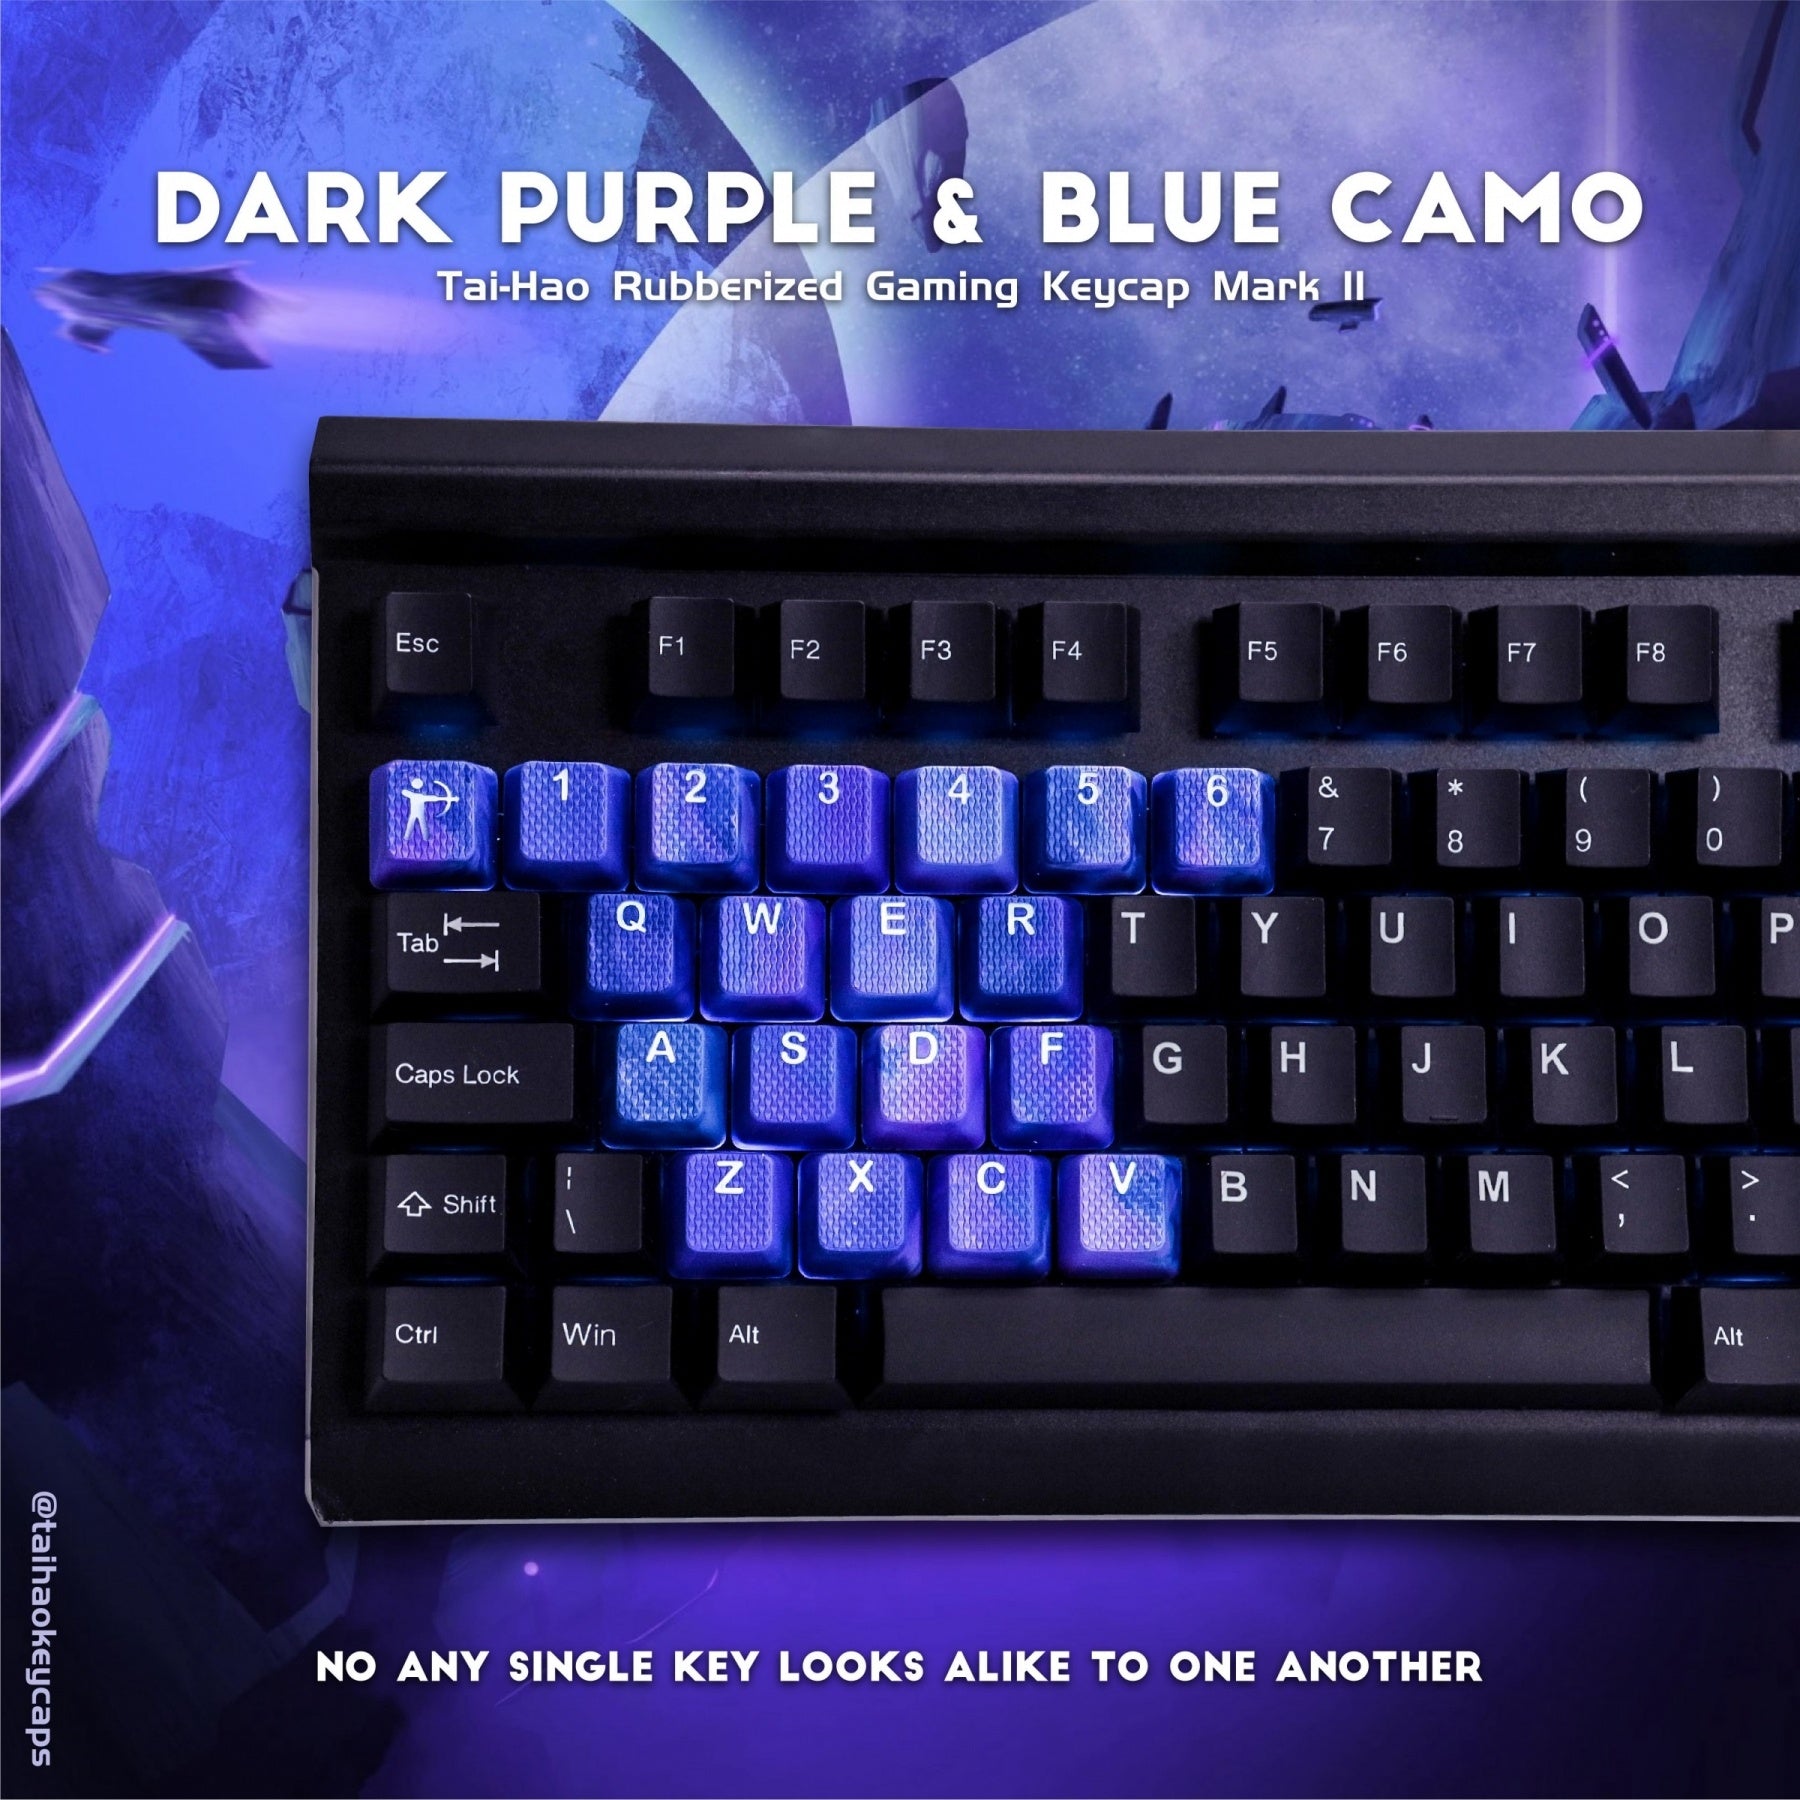 Tai-Hao 23 Key TPR Rubberized Gaming Keycap Set Dark Purple & Blue Camo Rubber MKIQA21YVU |28558|